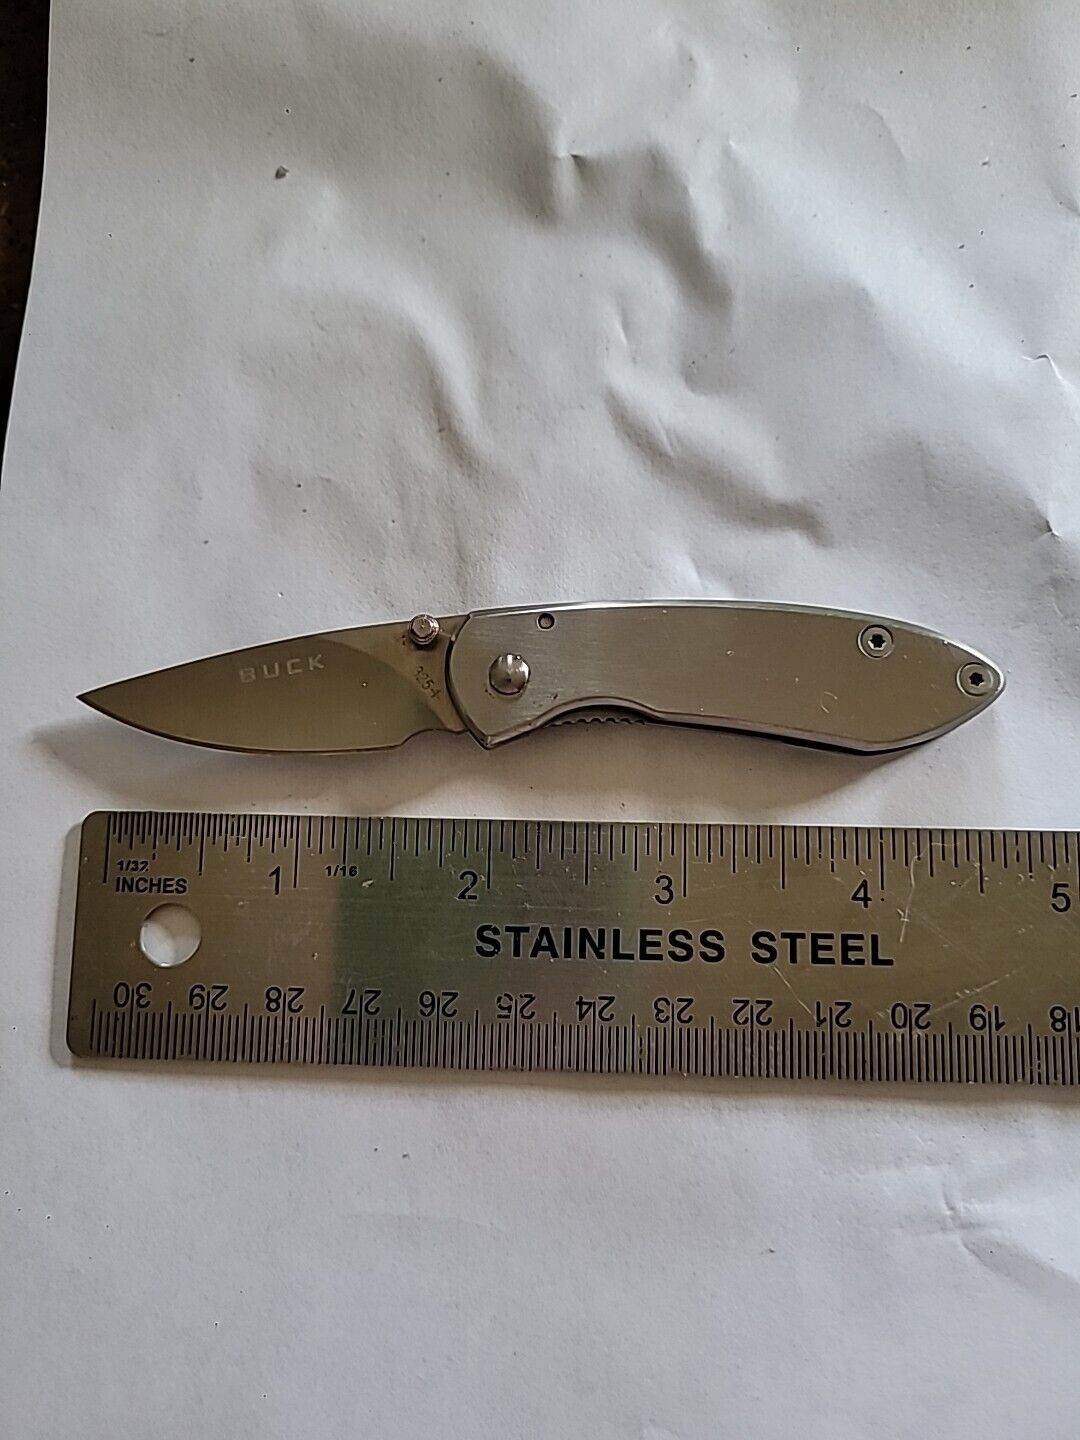 4.75” Stainless BUCK Colleague Folding Pocket Knife, Model 325